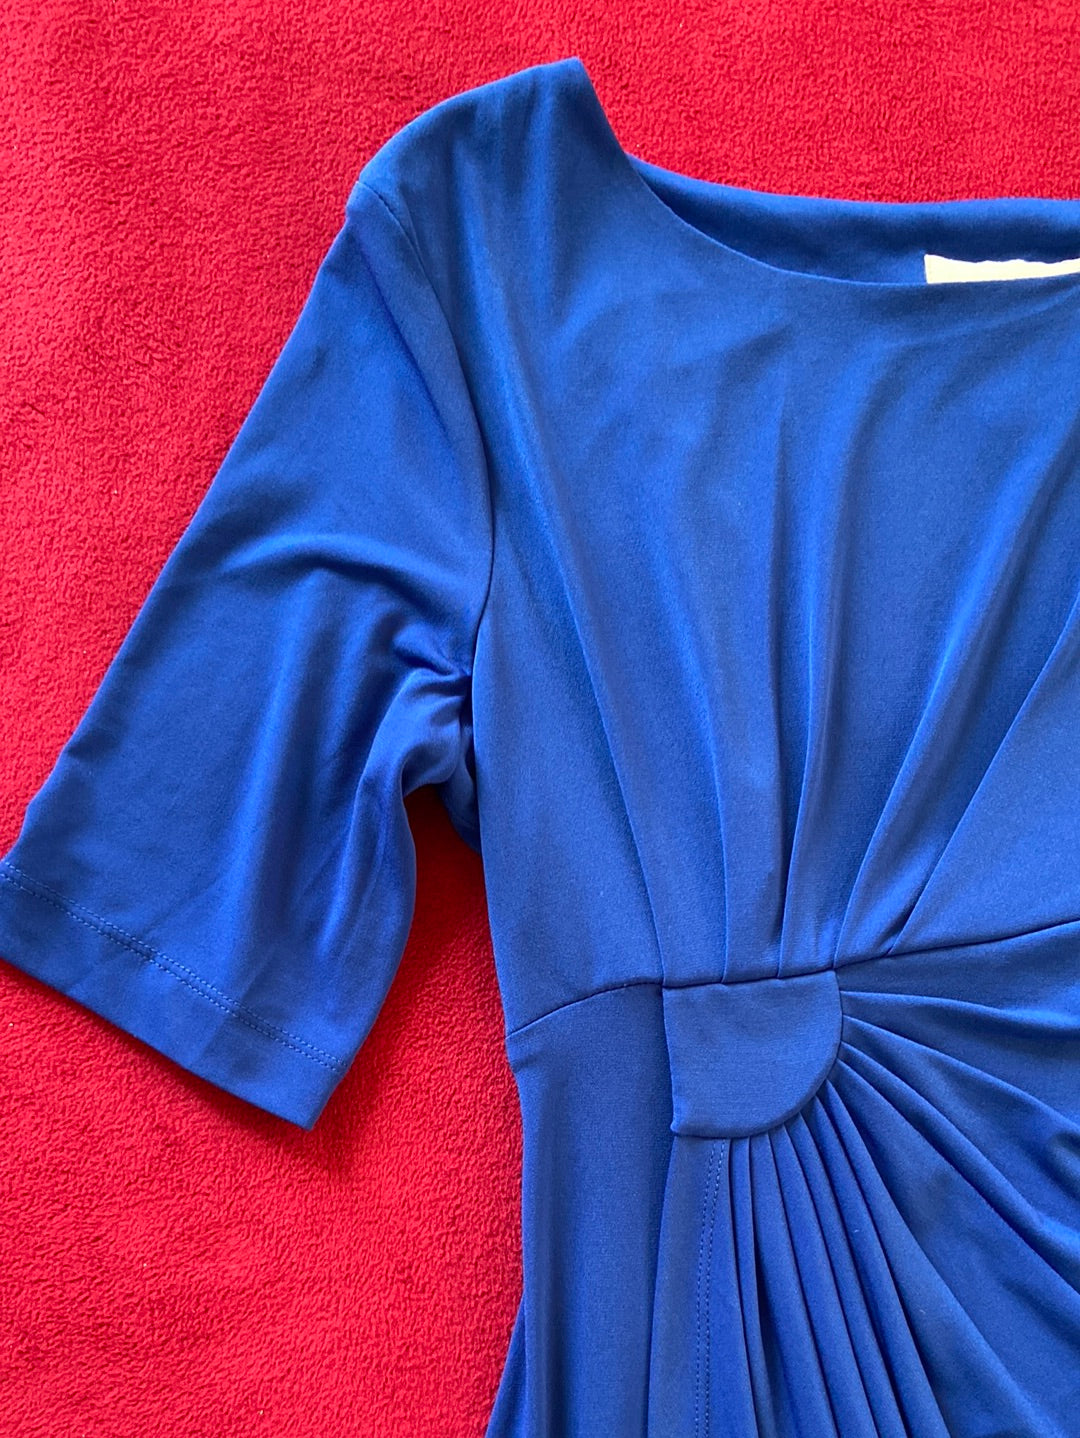 ROYAL BLUE North Style Dress Size 6P